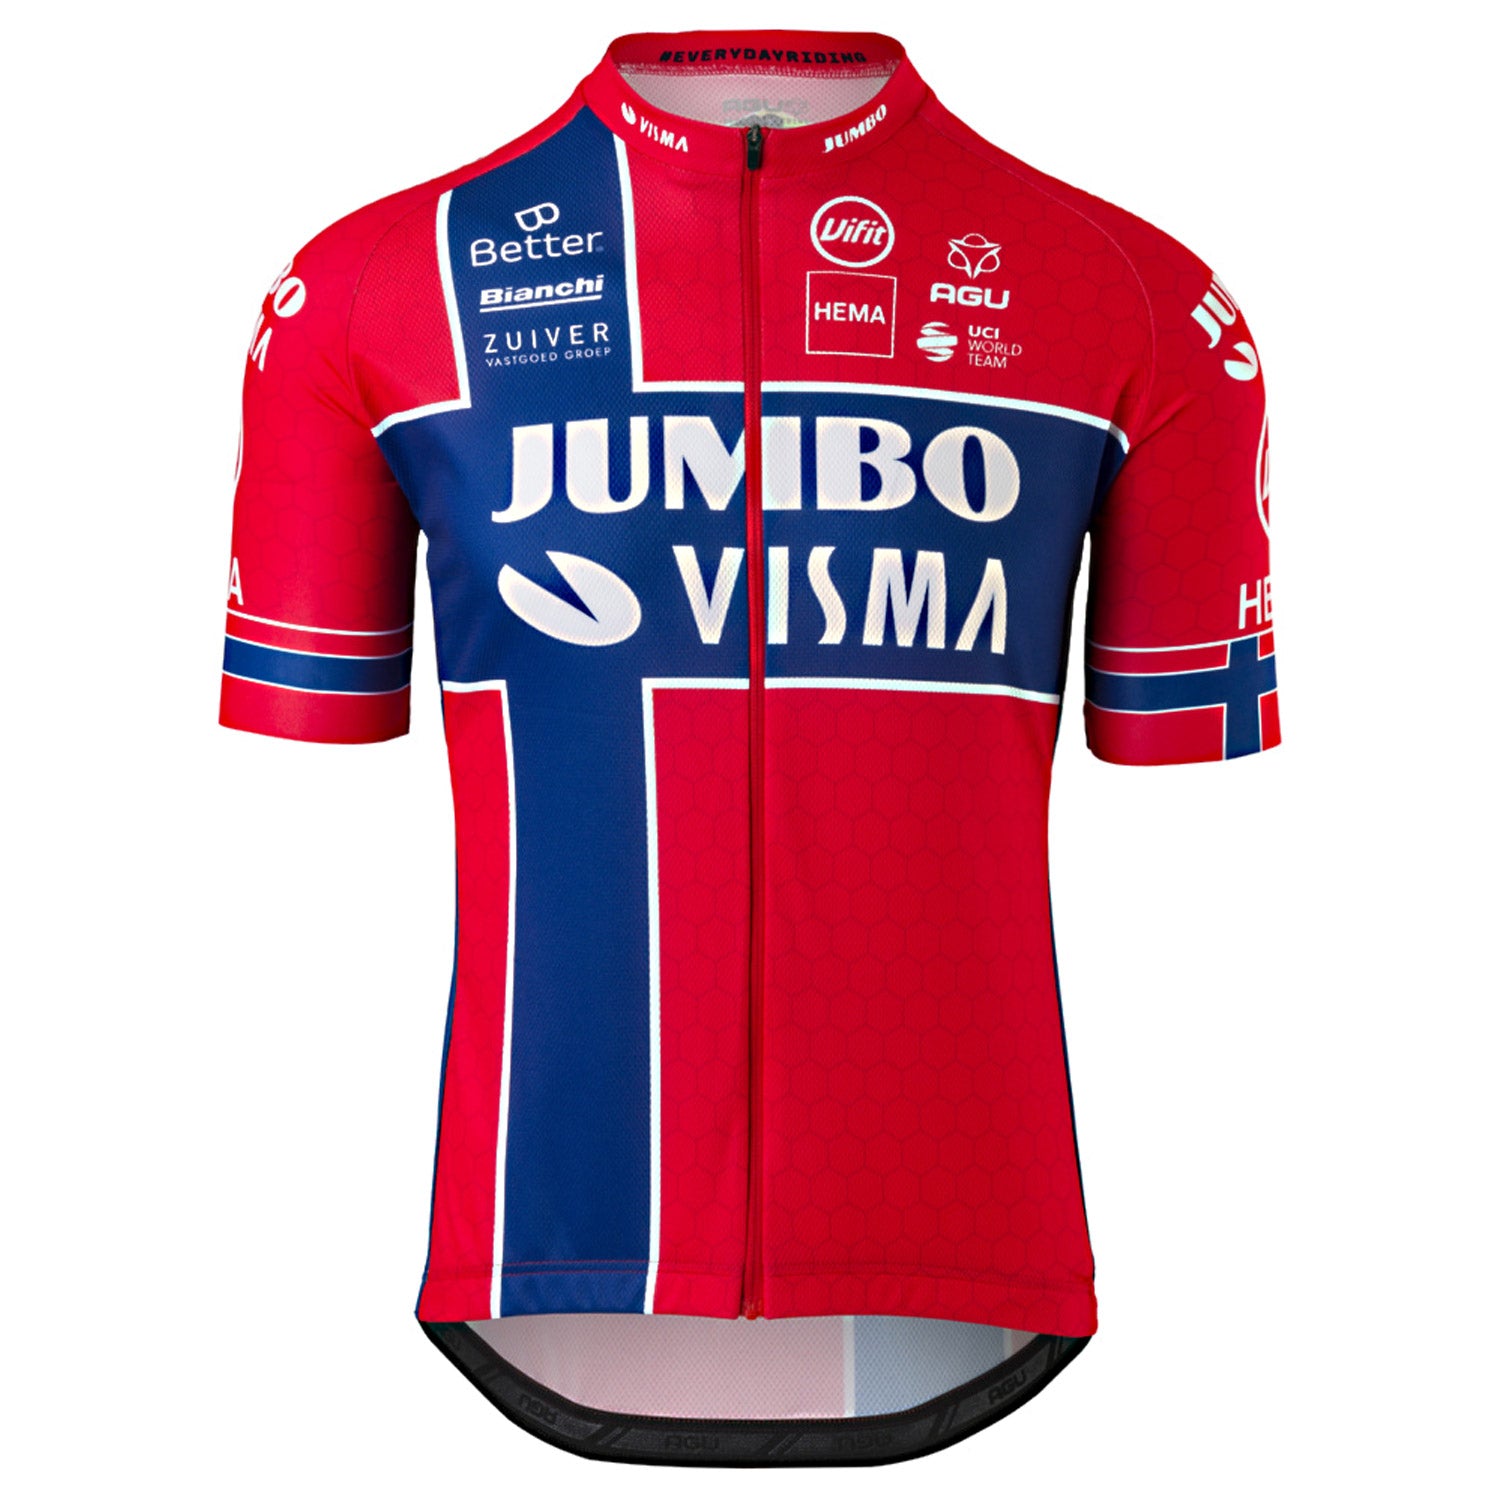 Jumbo Visma 2020 jersey - Norwegian champion | All4cycling